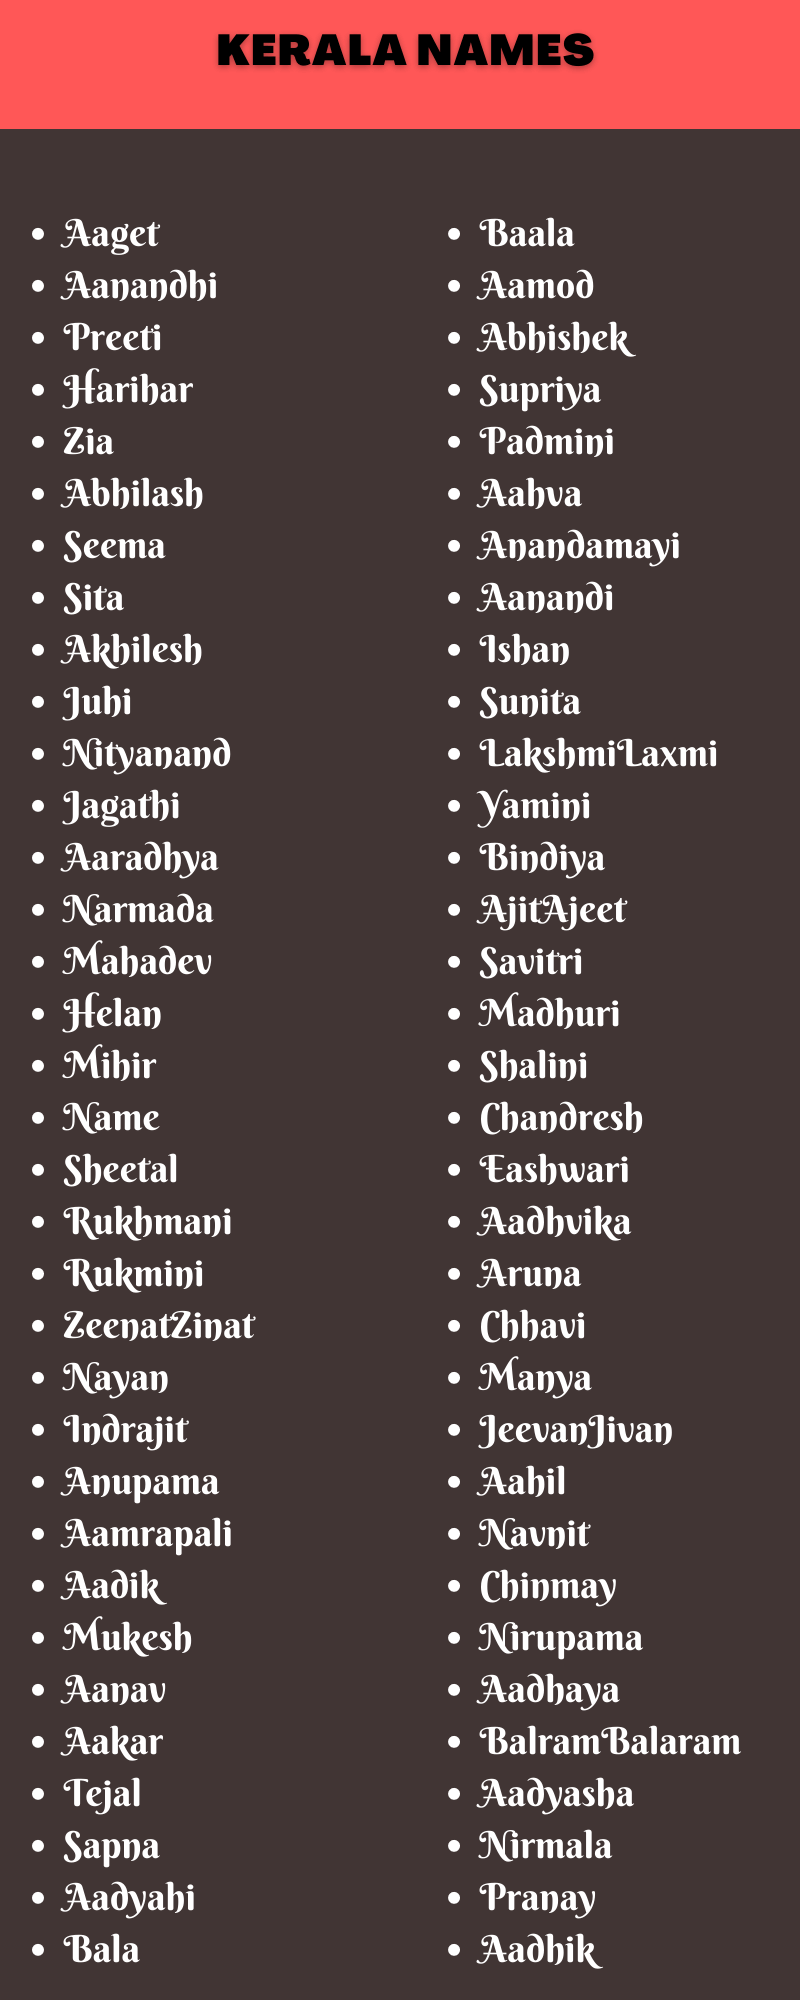 Kerala Names